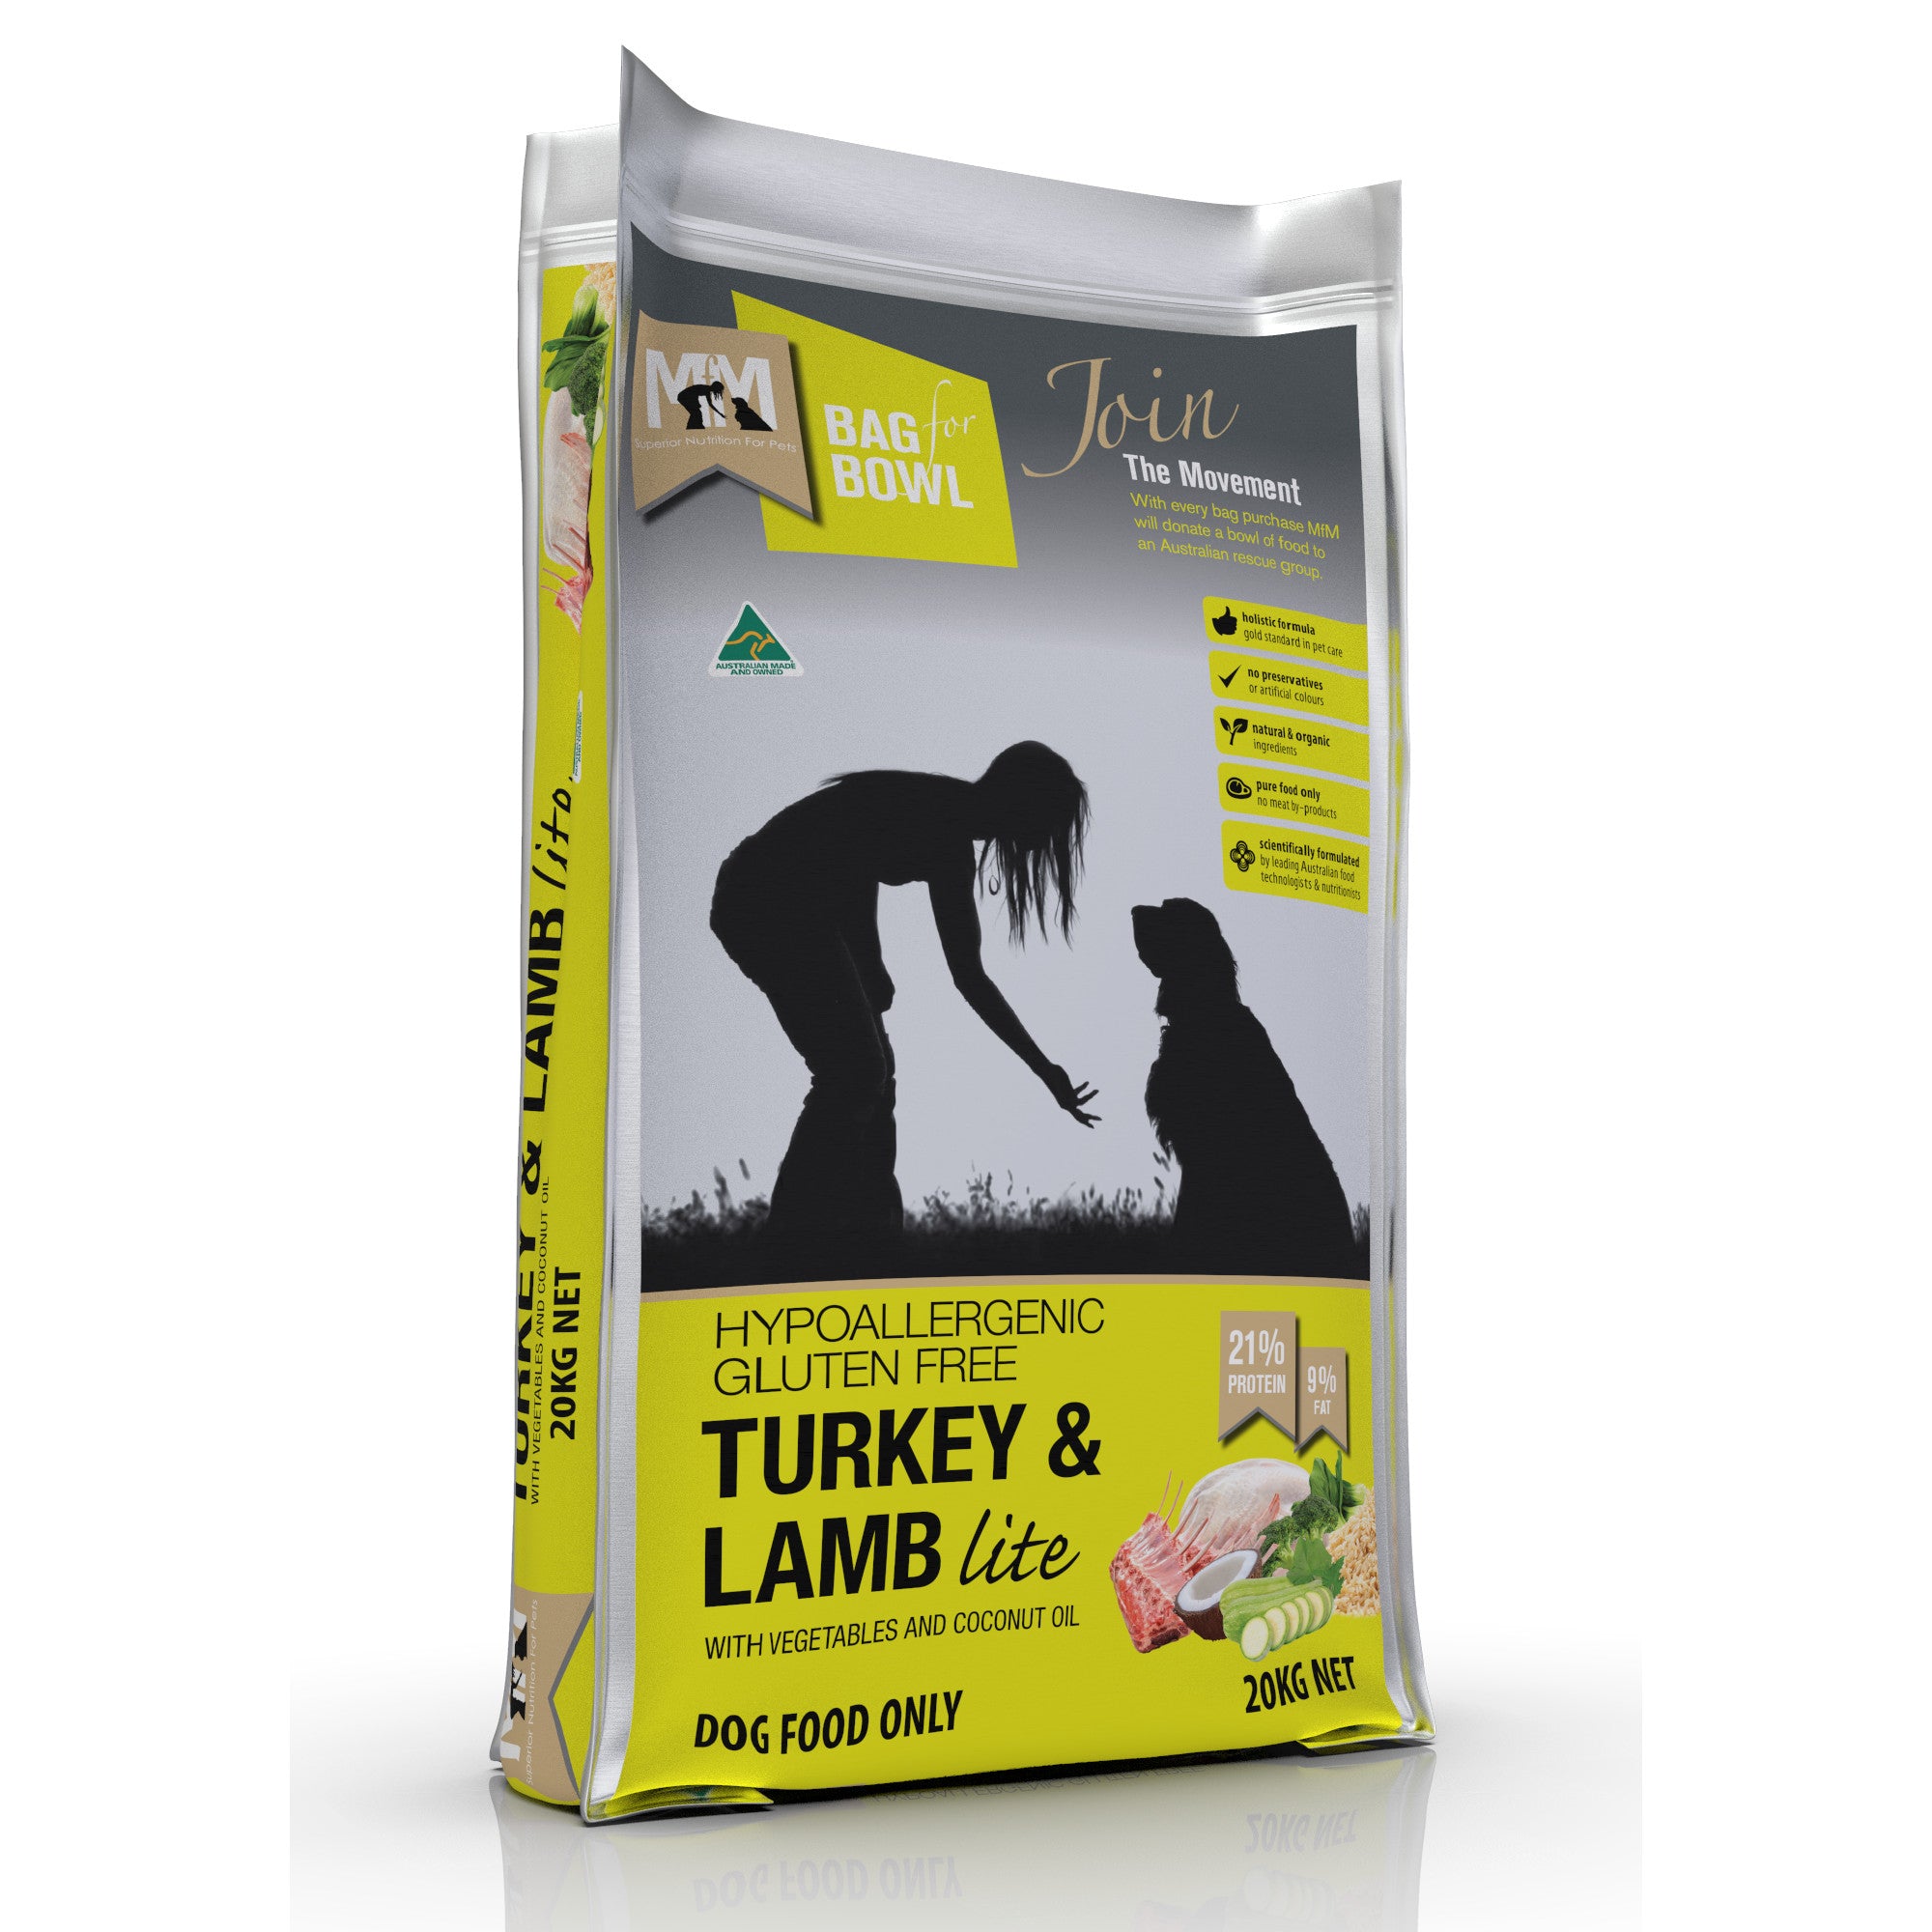 Meals for Mutts Turkey & Lamb Lite Dog Food 20kg.